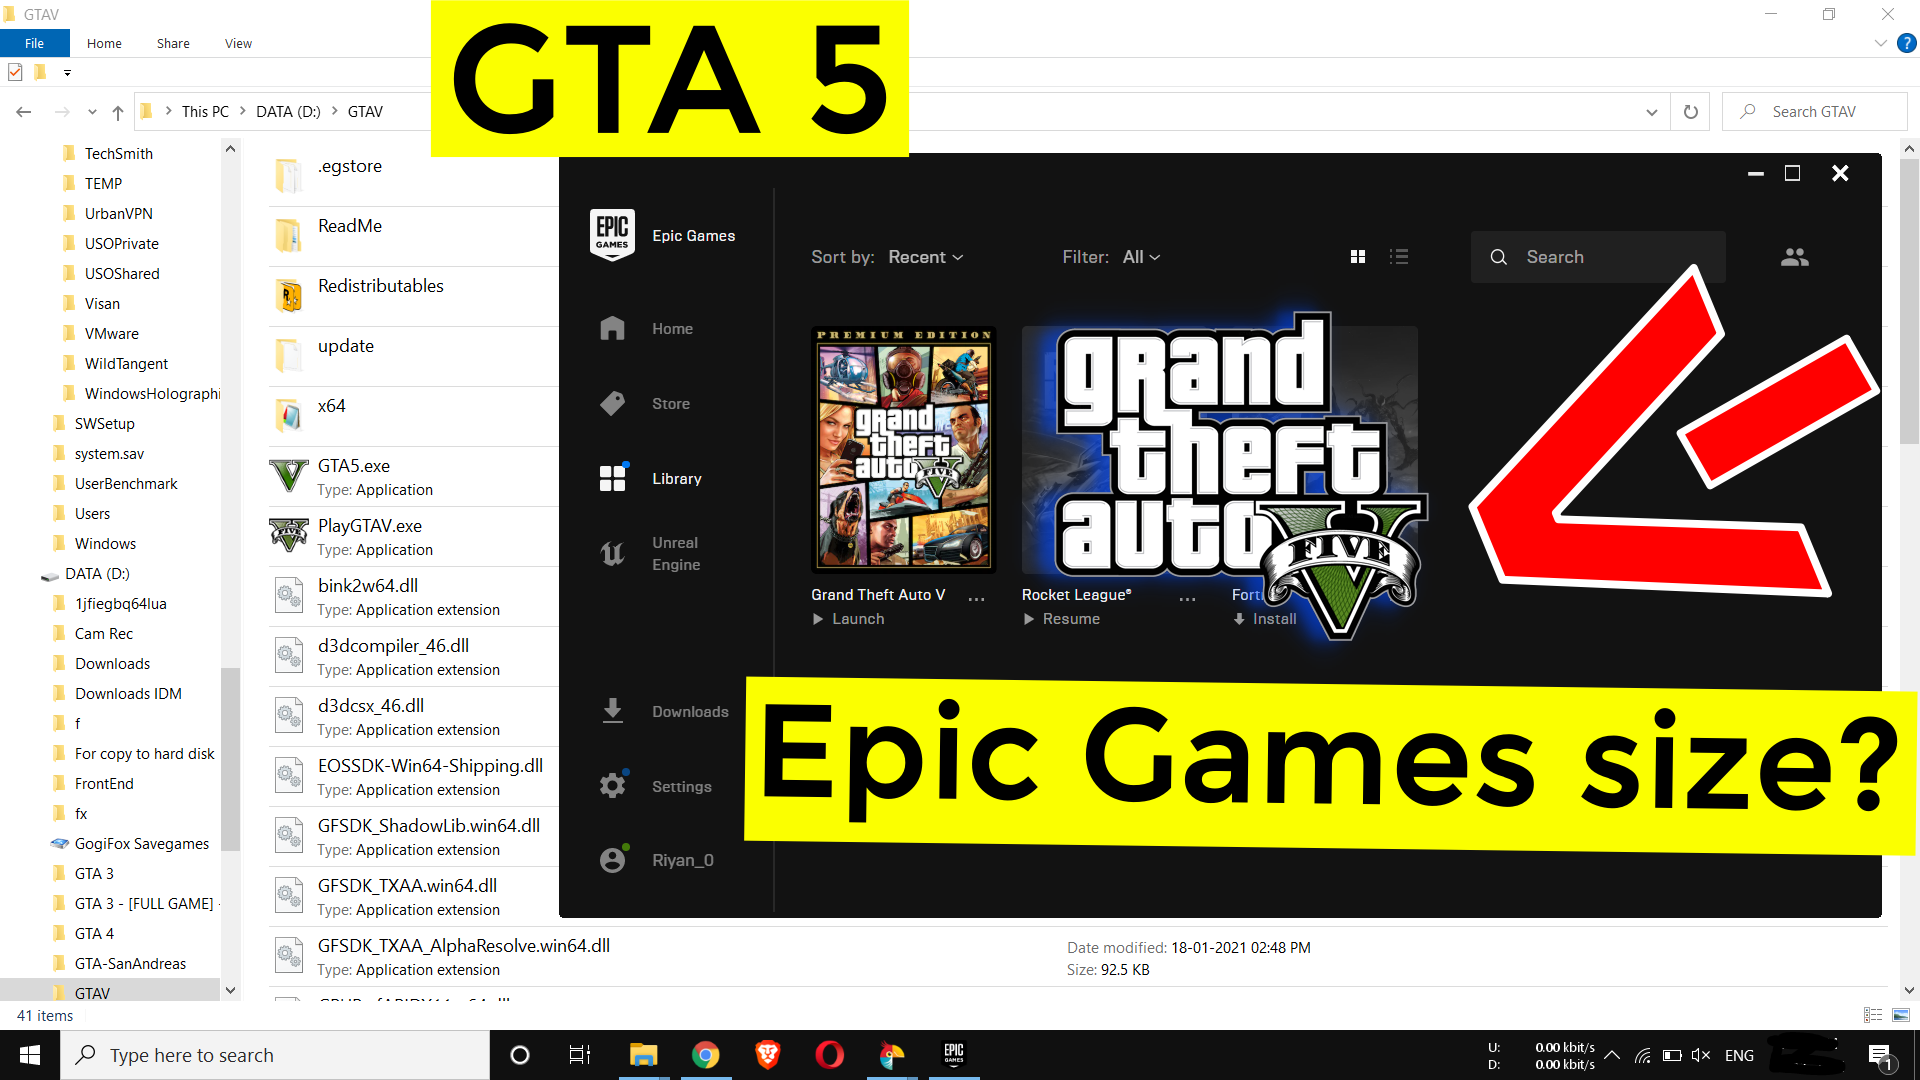 GTA 5 epic games size